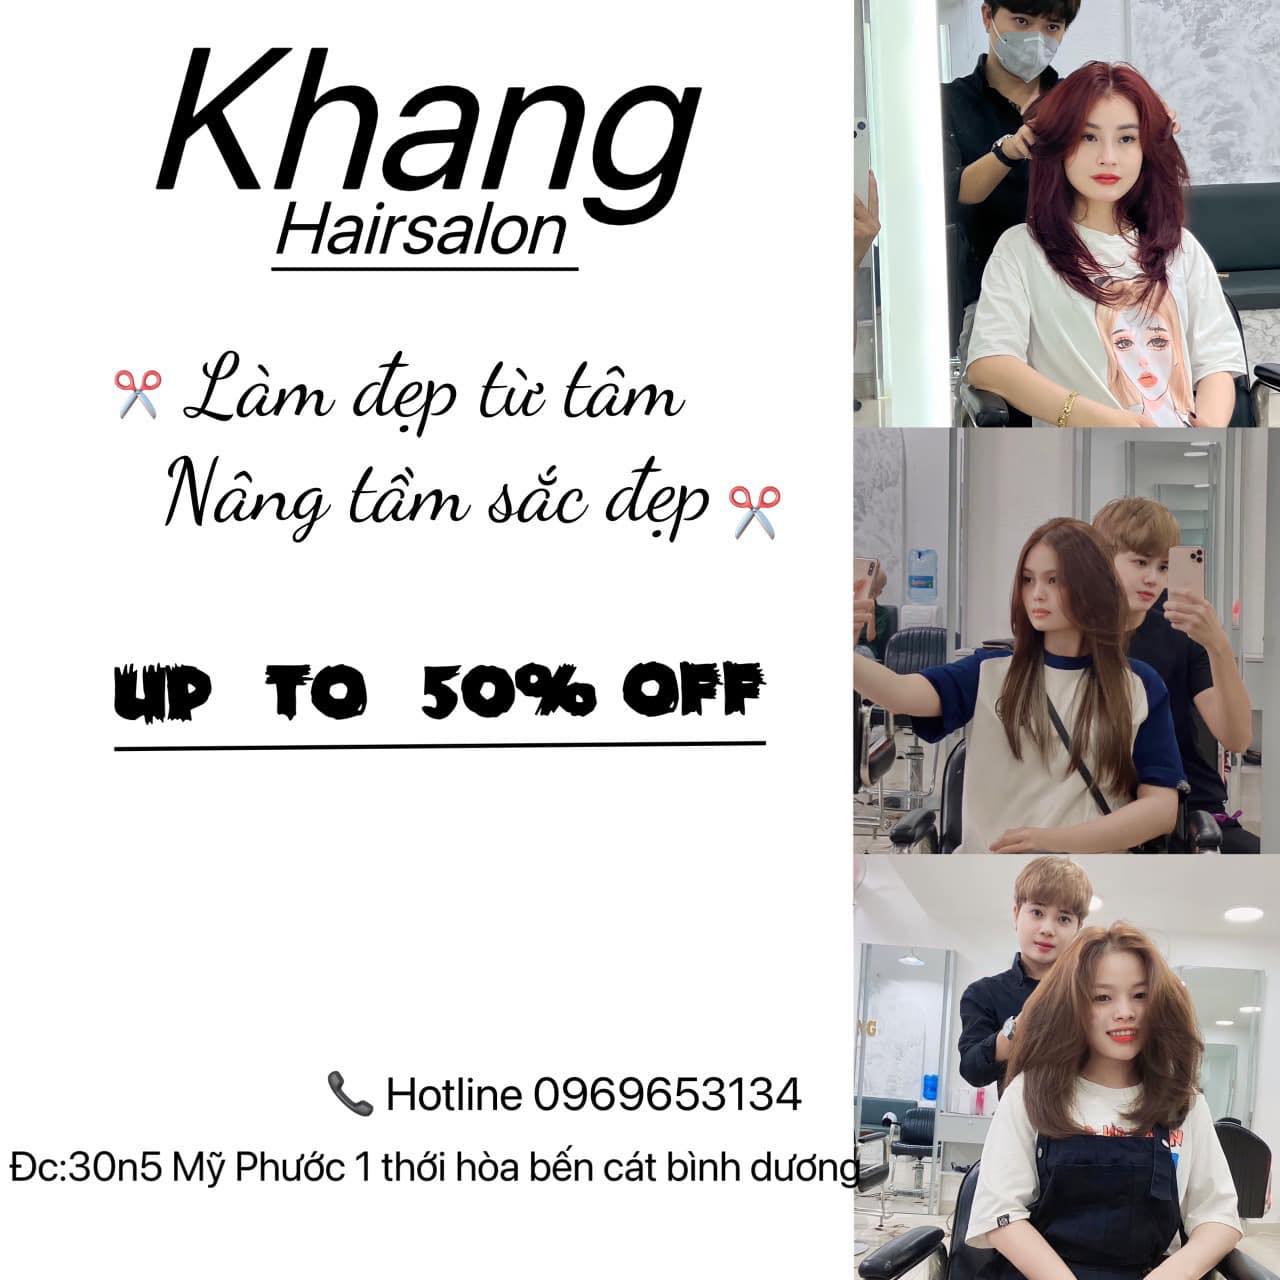 Binh Duong hair salon - khang